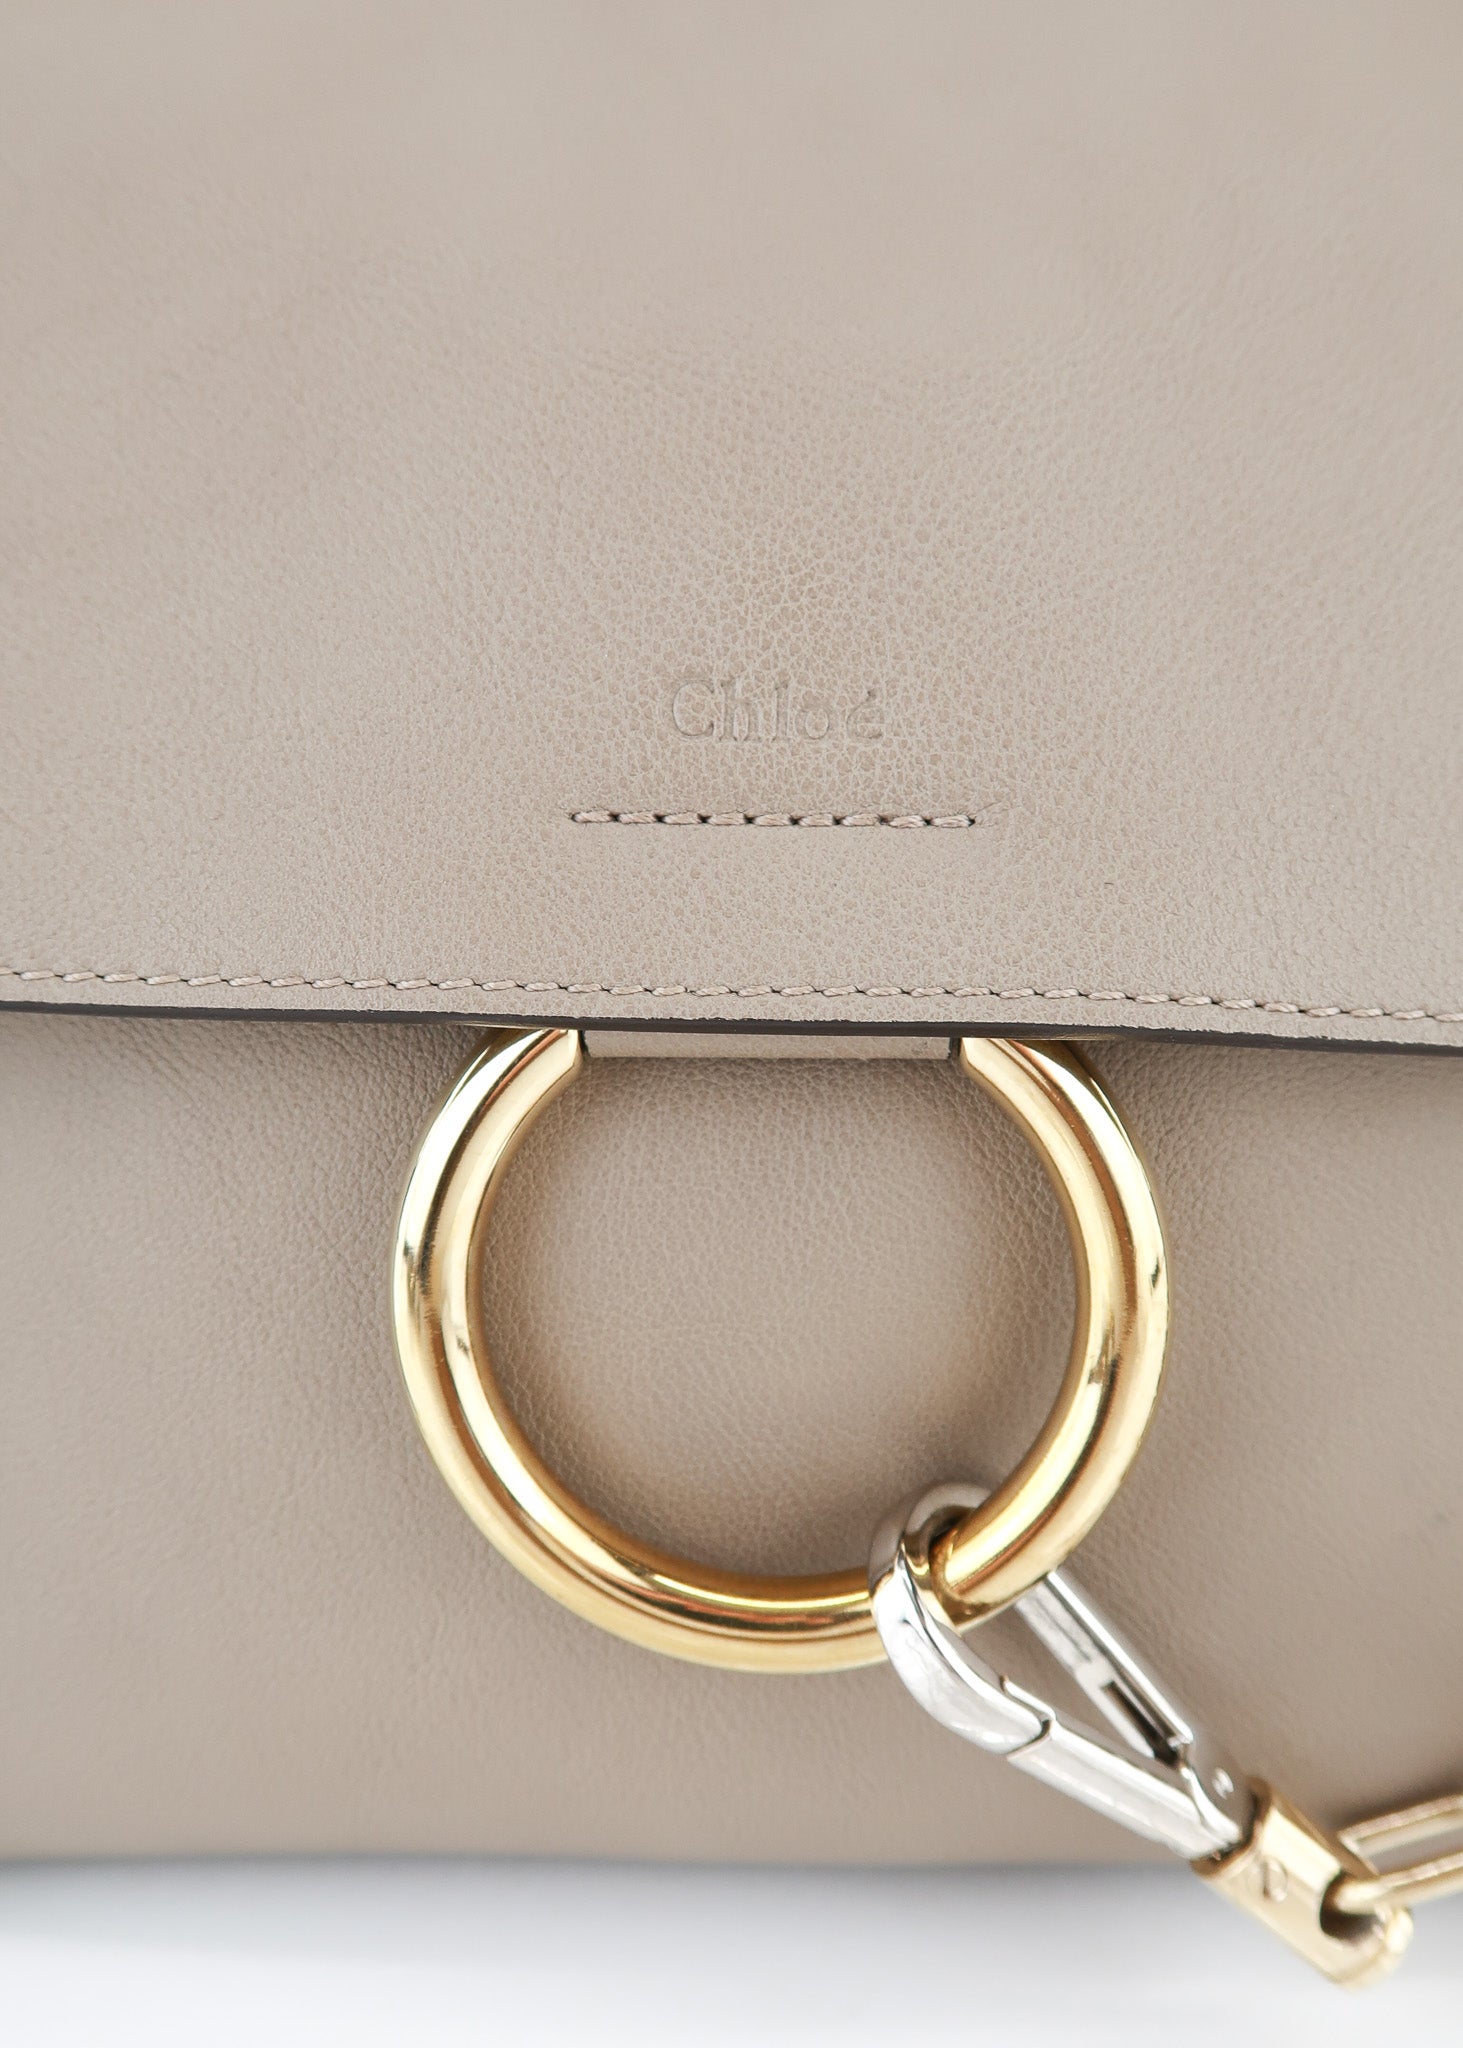 Chloe Faye Day Bag Leather Small Gray 2350131